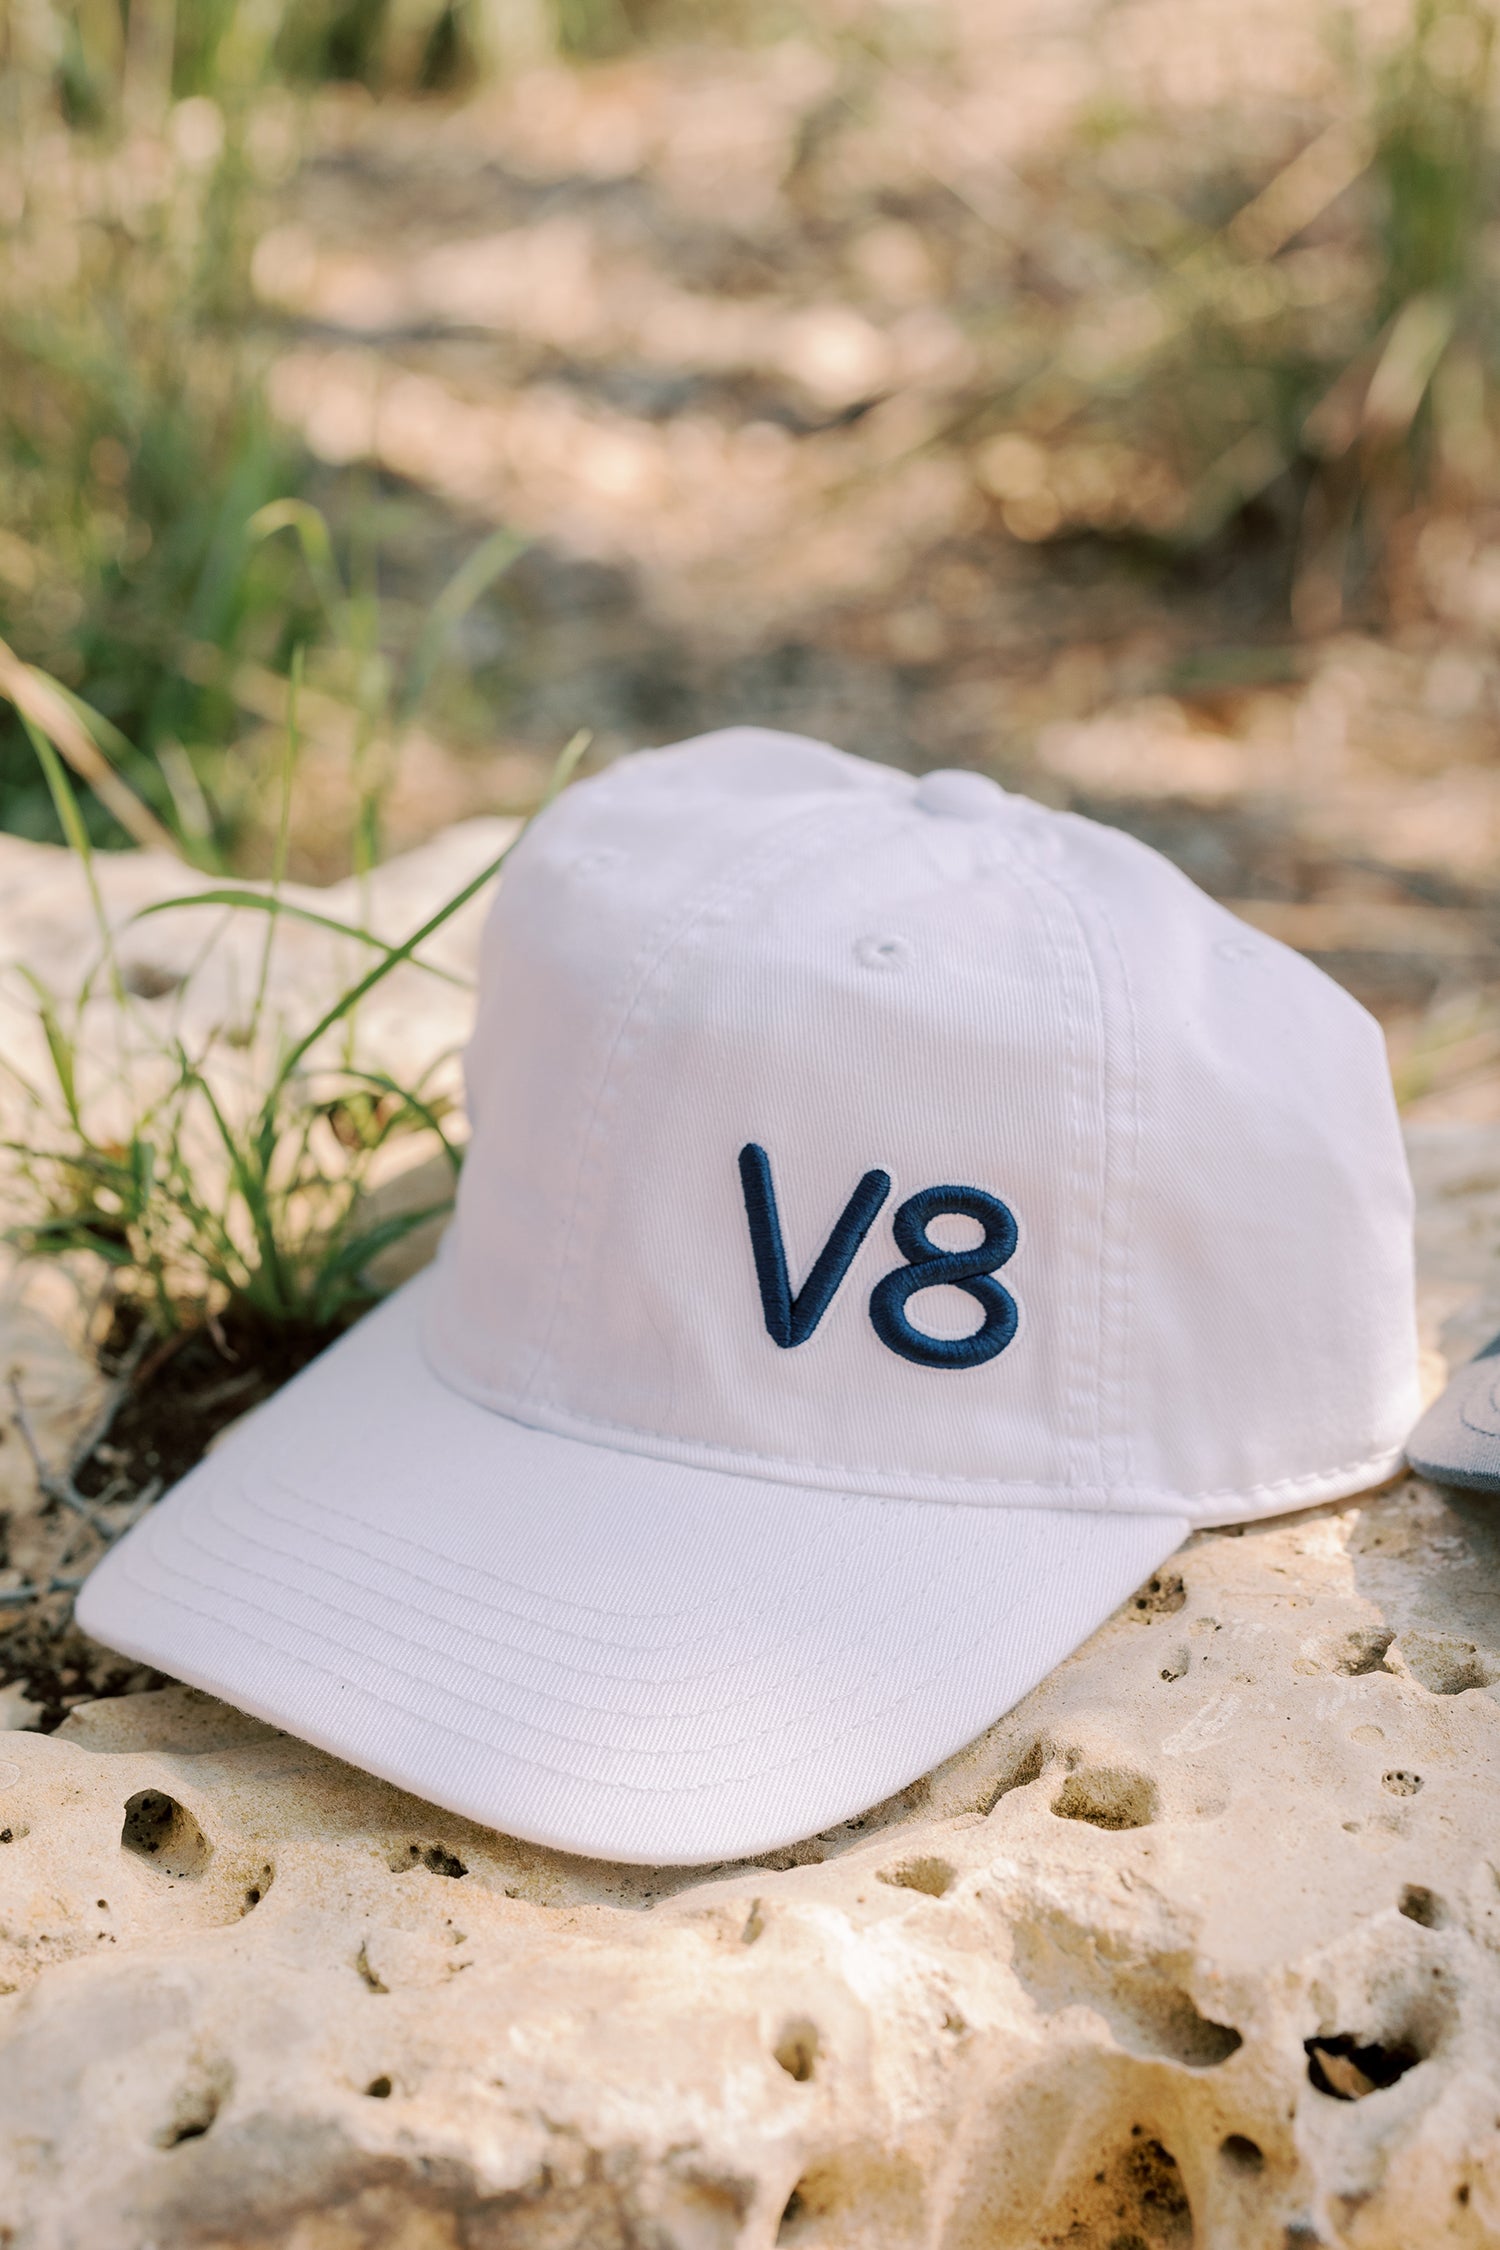 V8 The Mark of Excellence White Cap